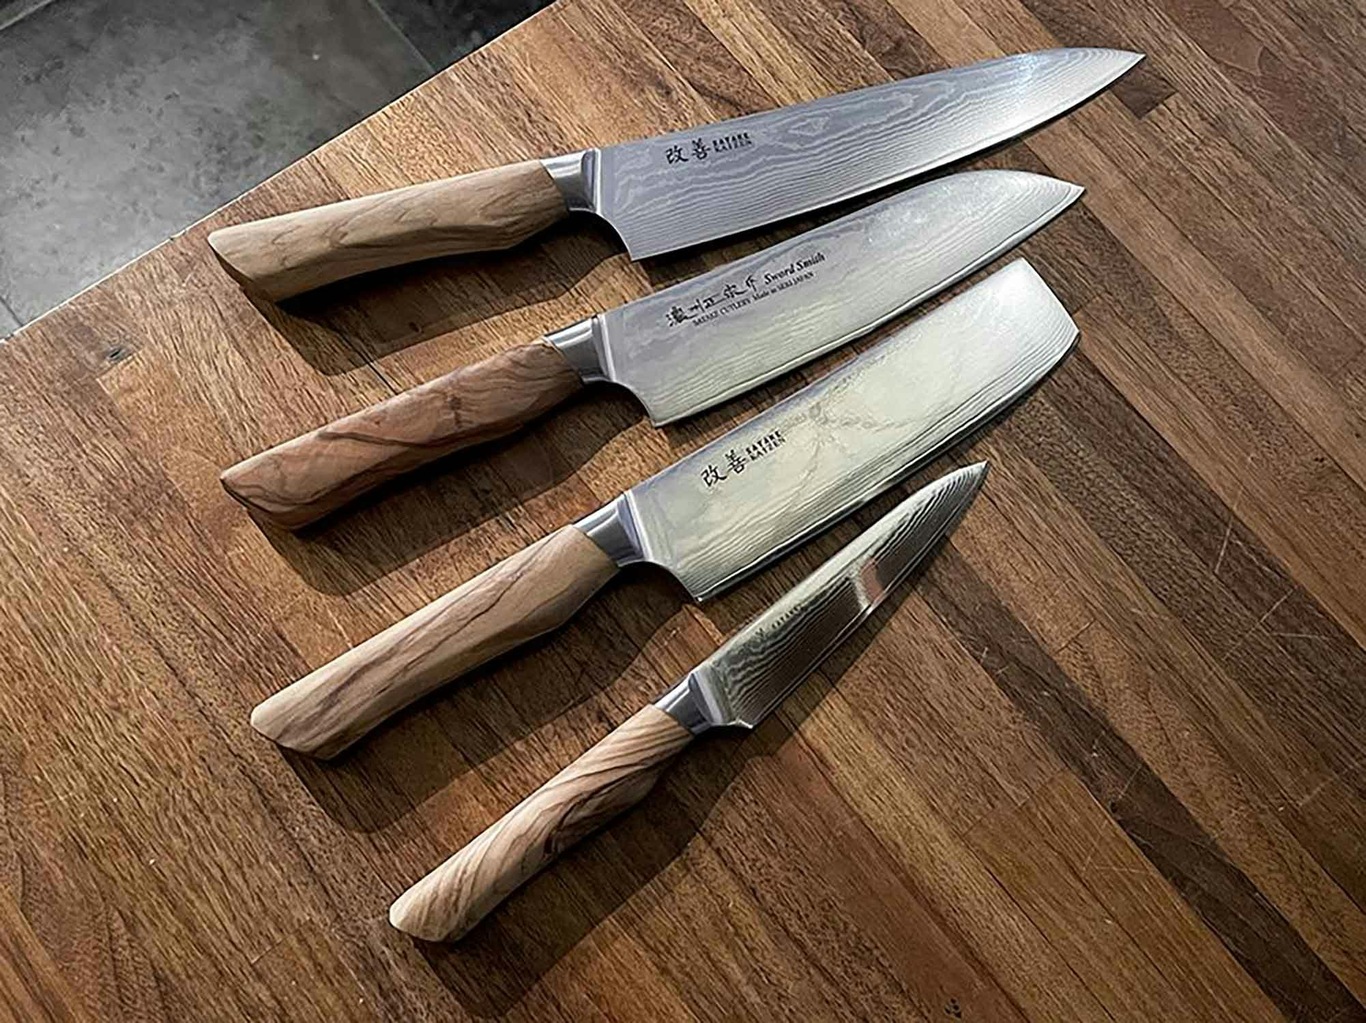 https://royaldesign.com/image/2/satake-satake-kaizen-santoku-chef-knife-18cm-1?w=800&quality=80